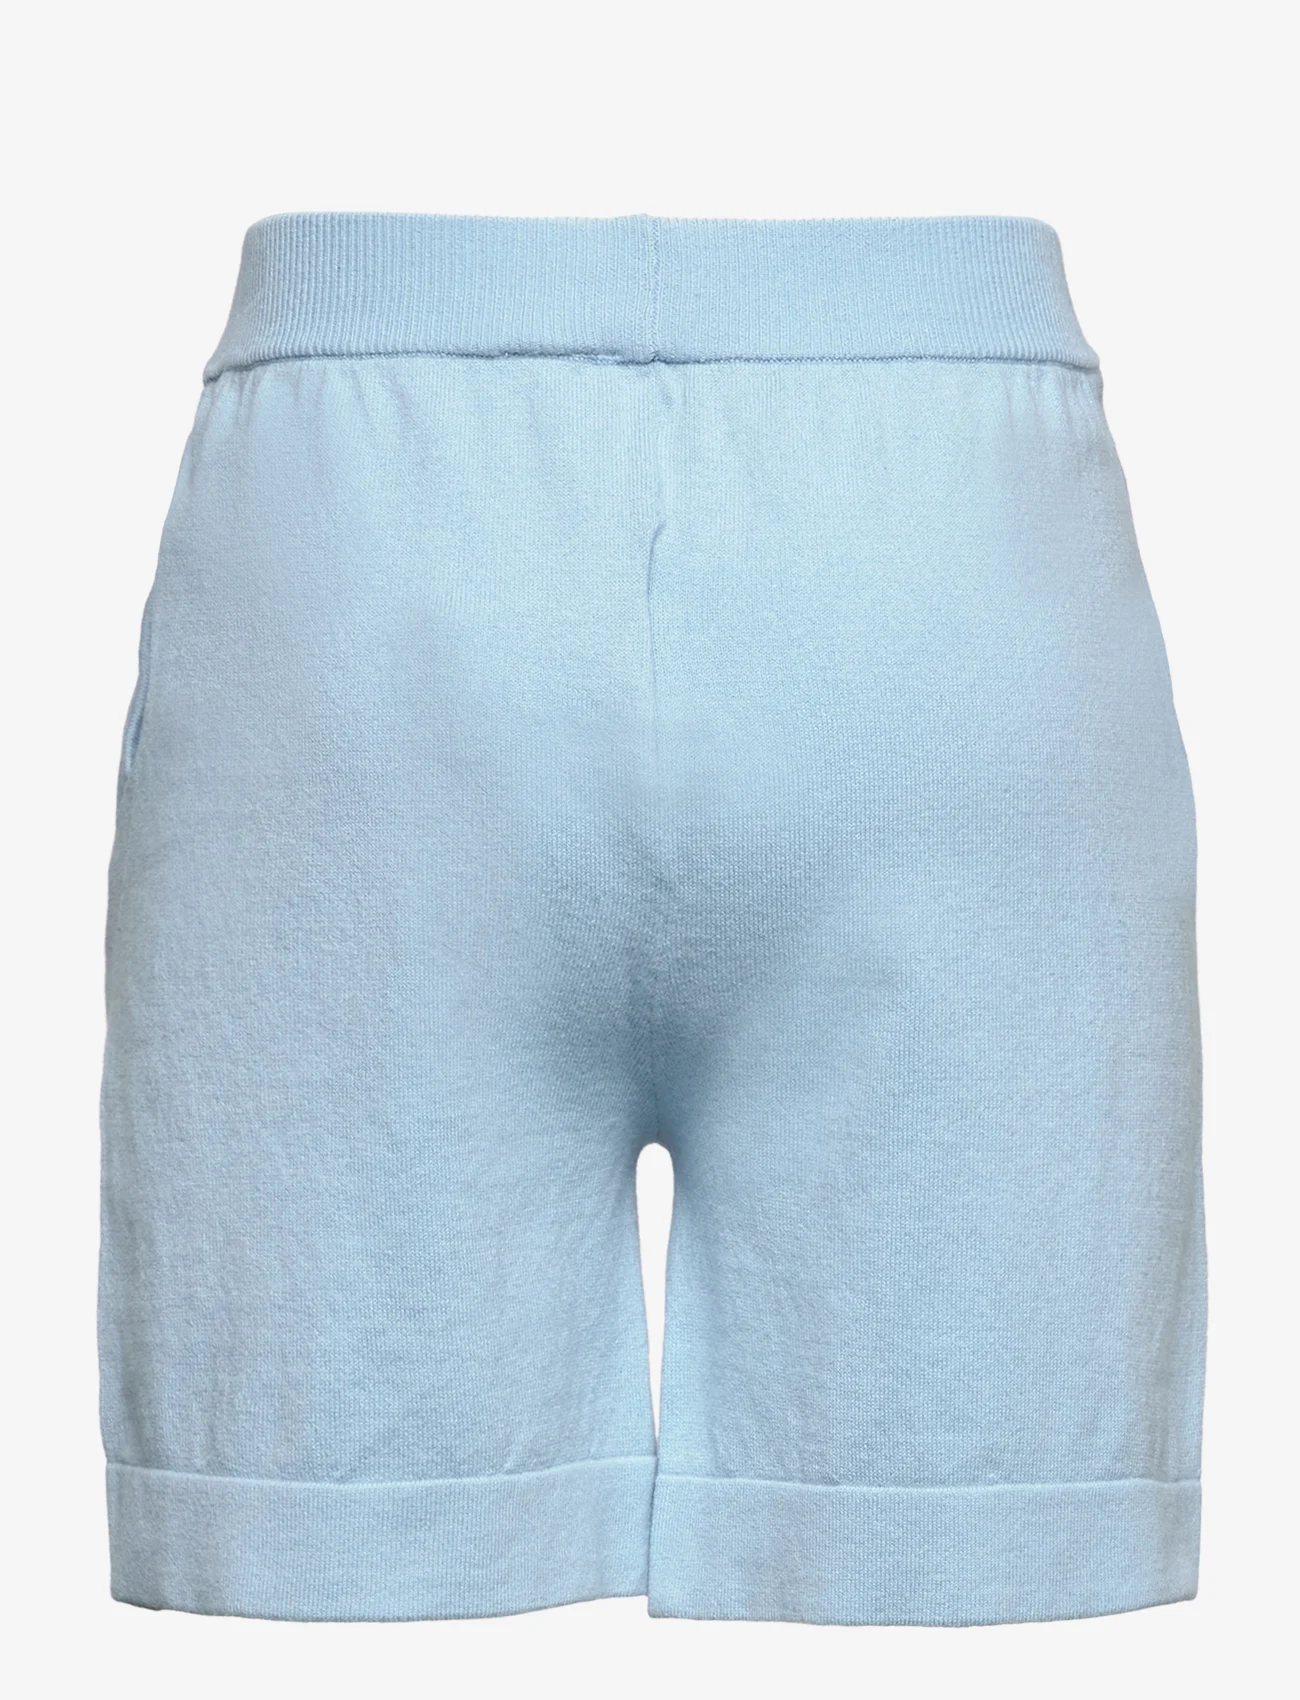 FUB - Shorts - sweat shorts - glacier - 1